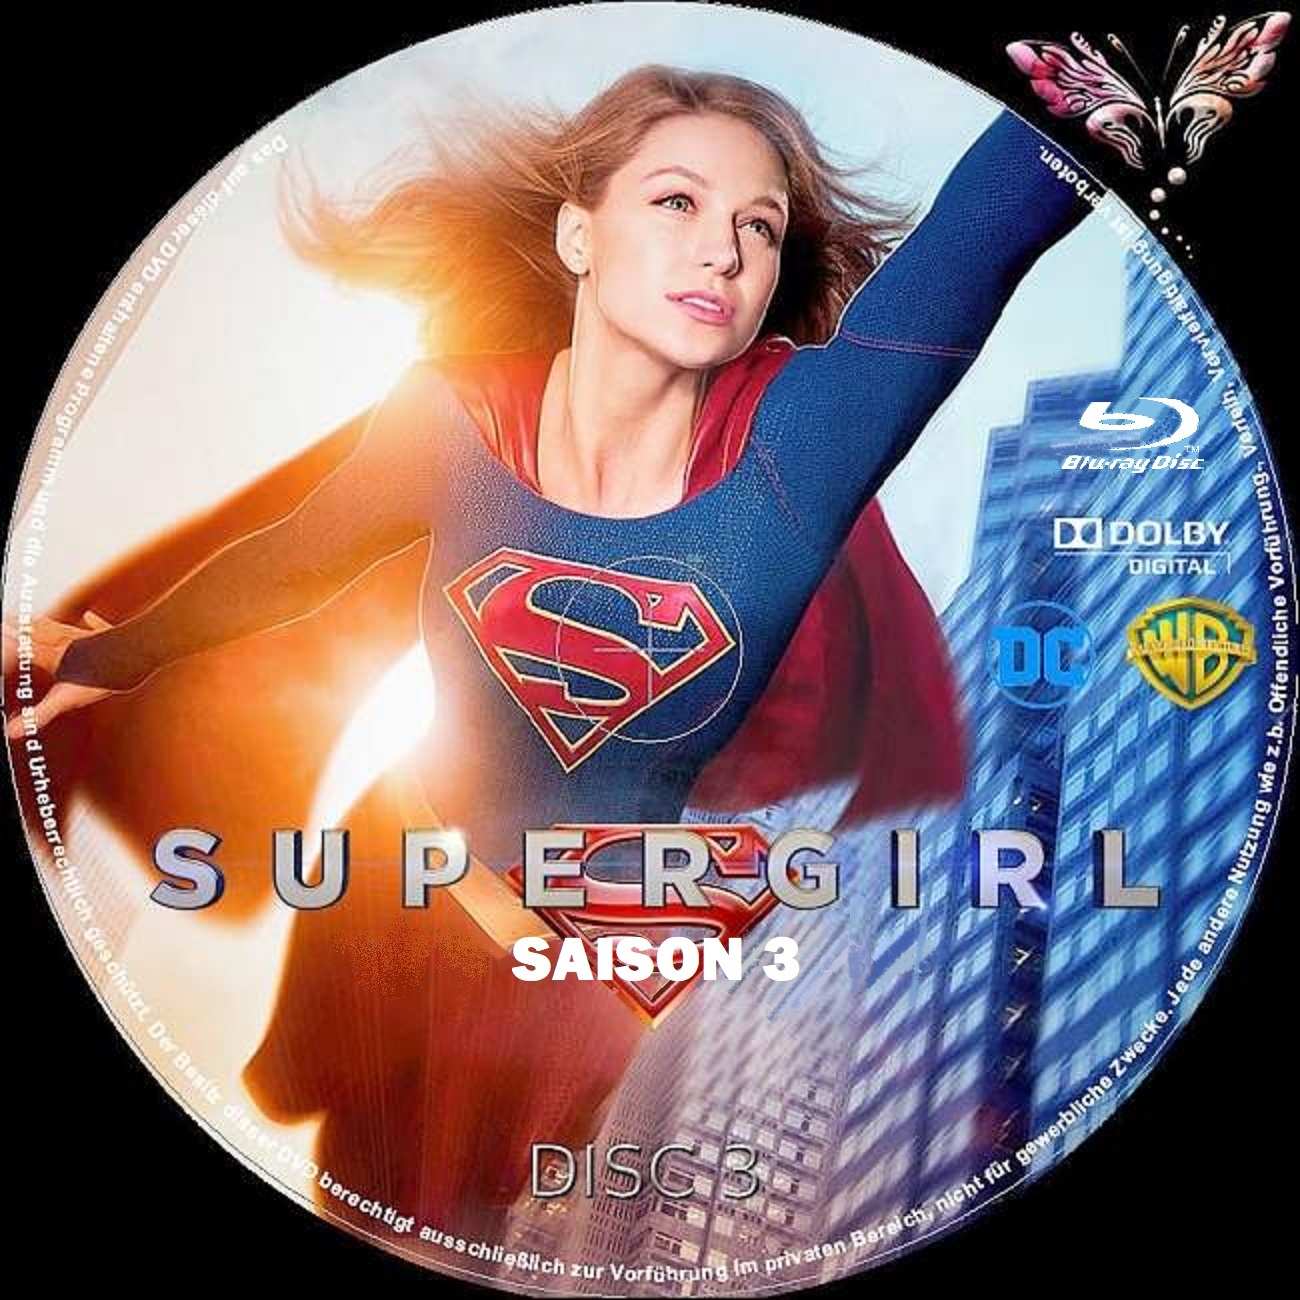 Supergirl saison 3 custom (BLU-RAY) DISC 3